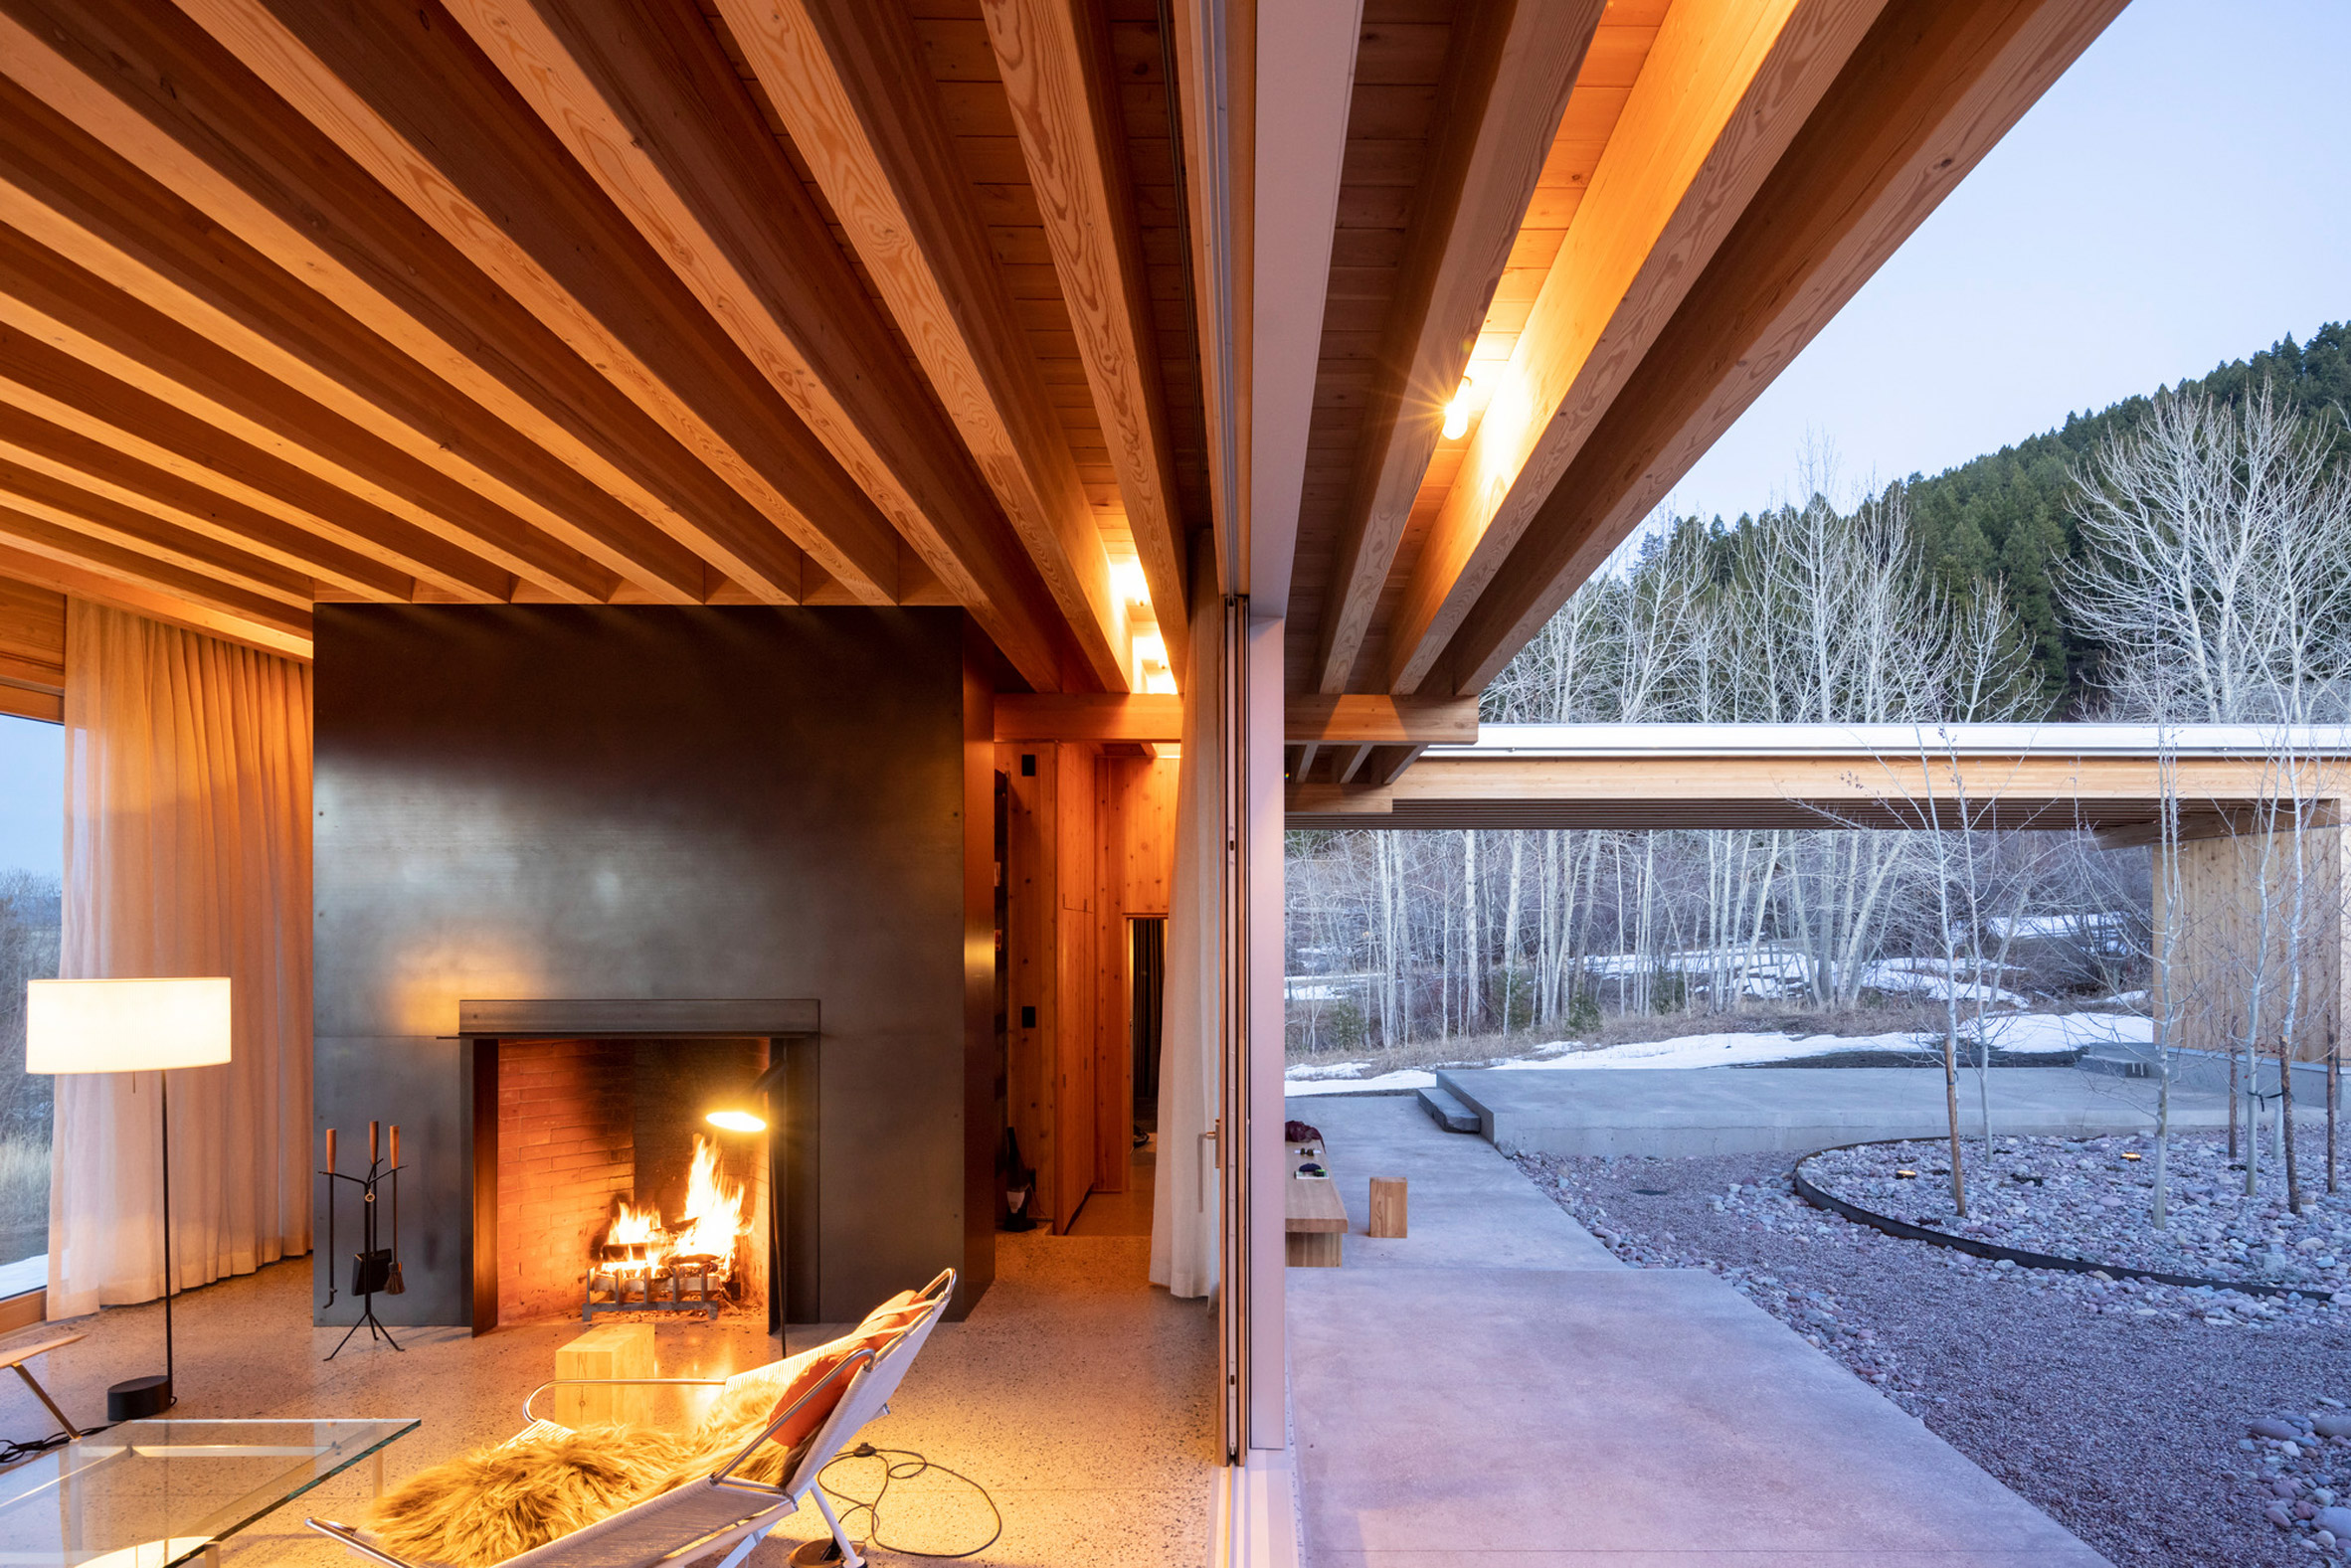 Fireplace by Barkow Leibinger